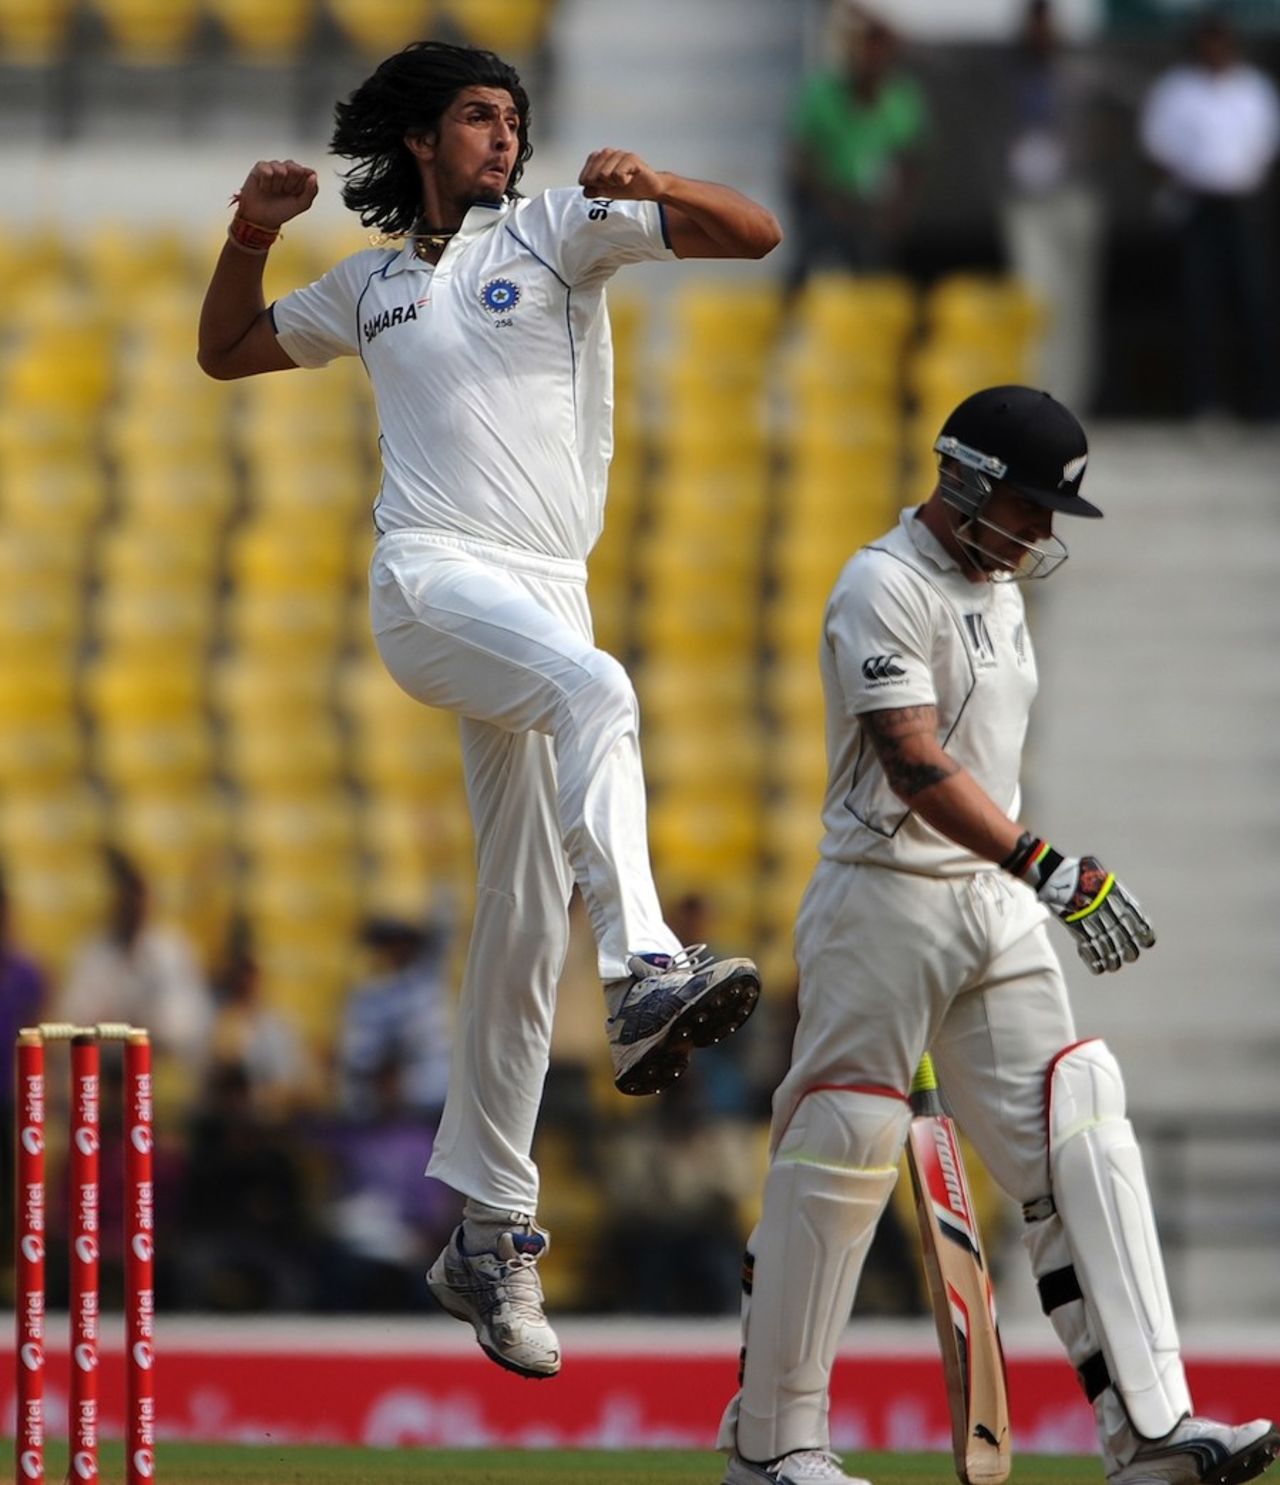 Ishant Sharma leaps in celebration after dismissing Brendon McCullum, India v New Zealand, 3rd Test, Nagpur, 2nd day, November 21, 2010